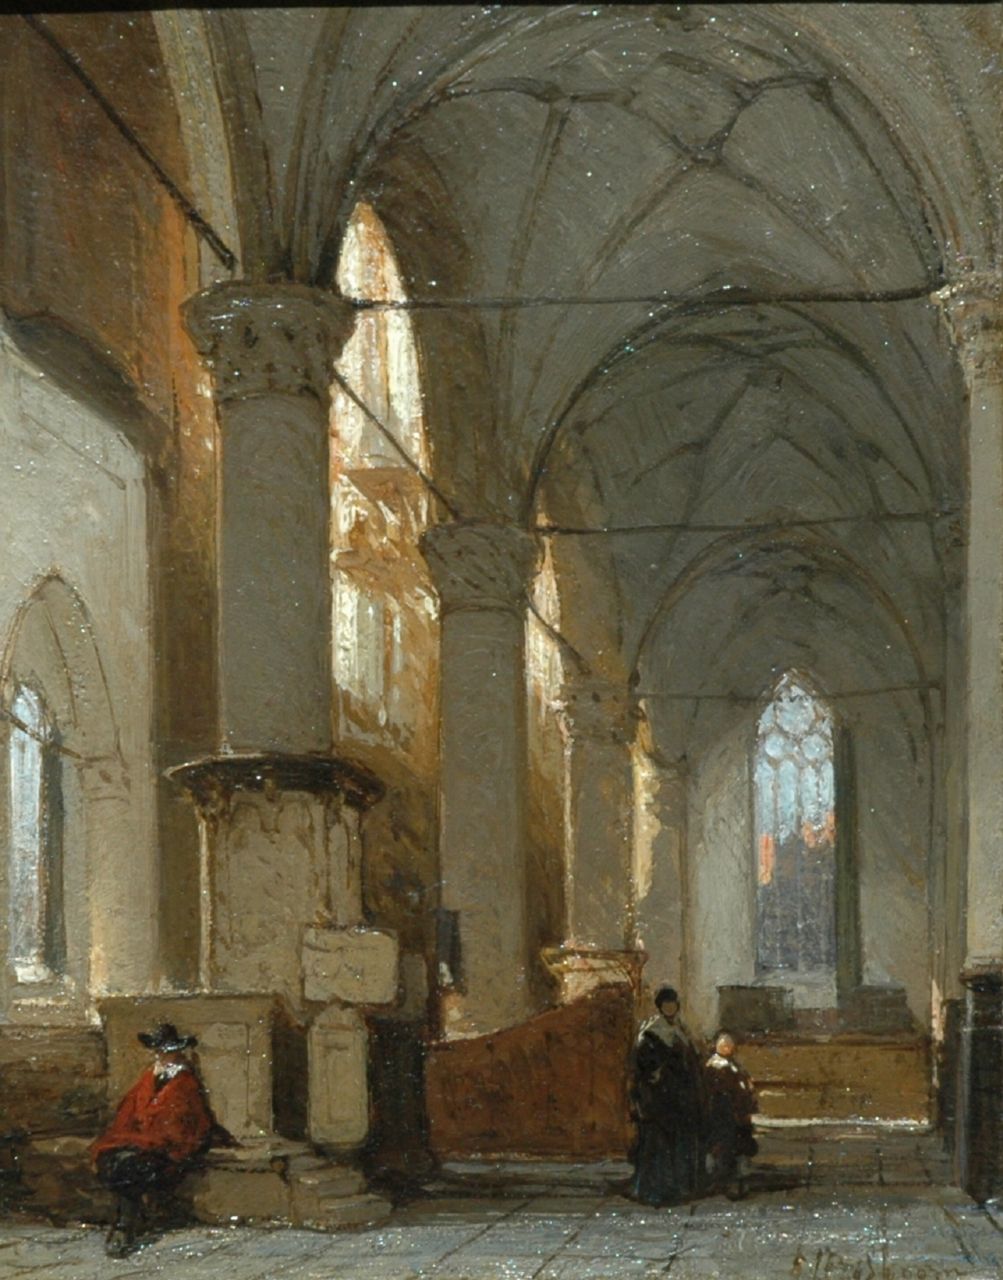 Bosboom J.  | Johannes Bosboom, Interieur van de Grote Kerk in Alkmaar, olieverf op paneel 19,1 x 14,9 cm, gesigneerd rechtsonder